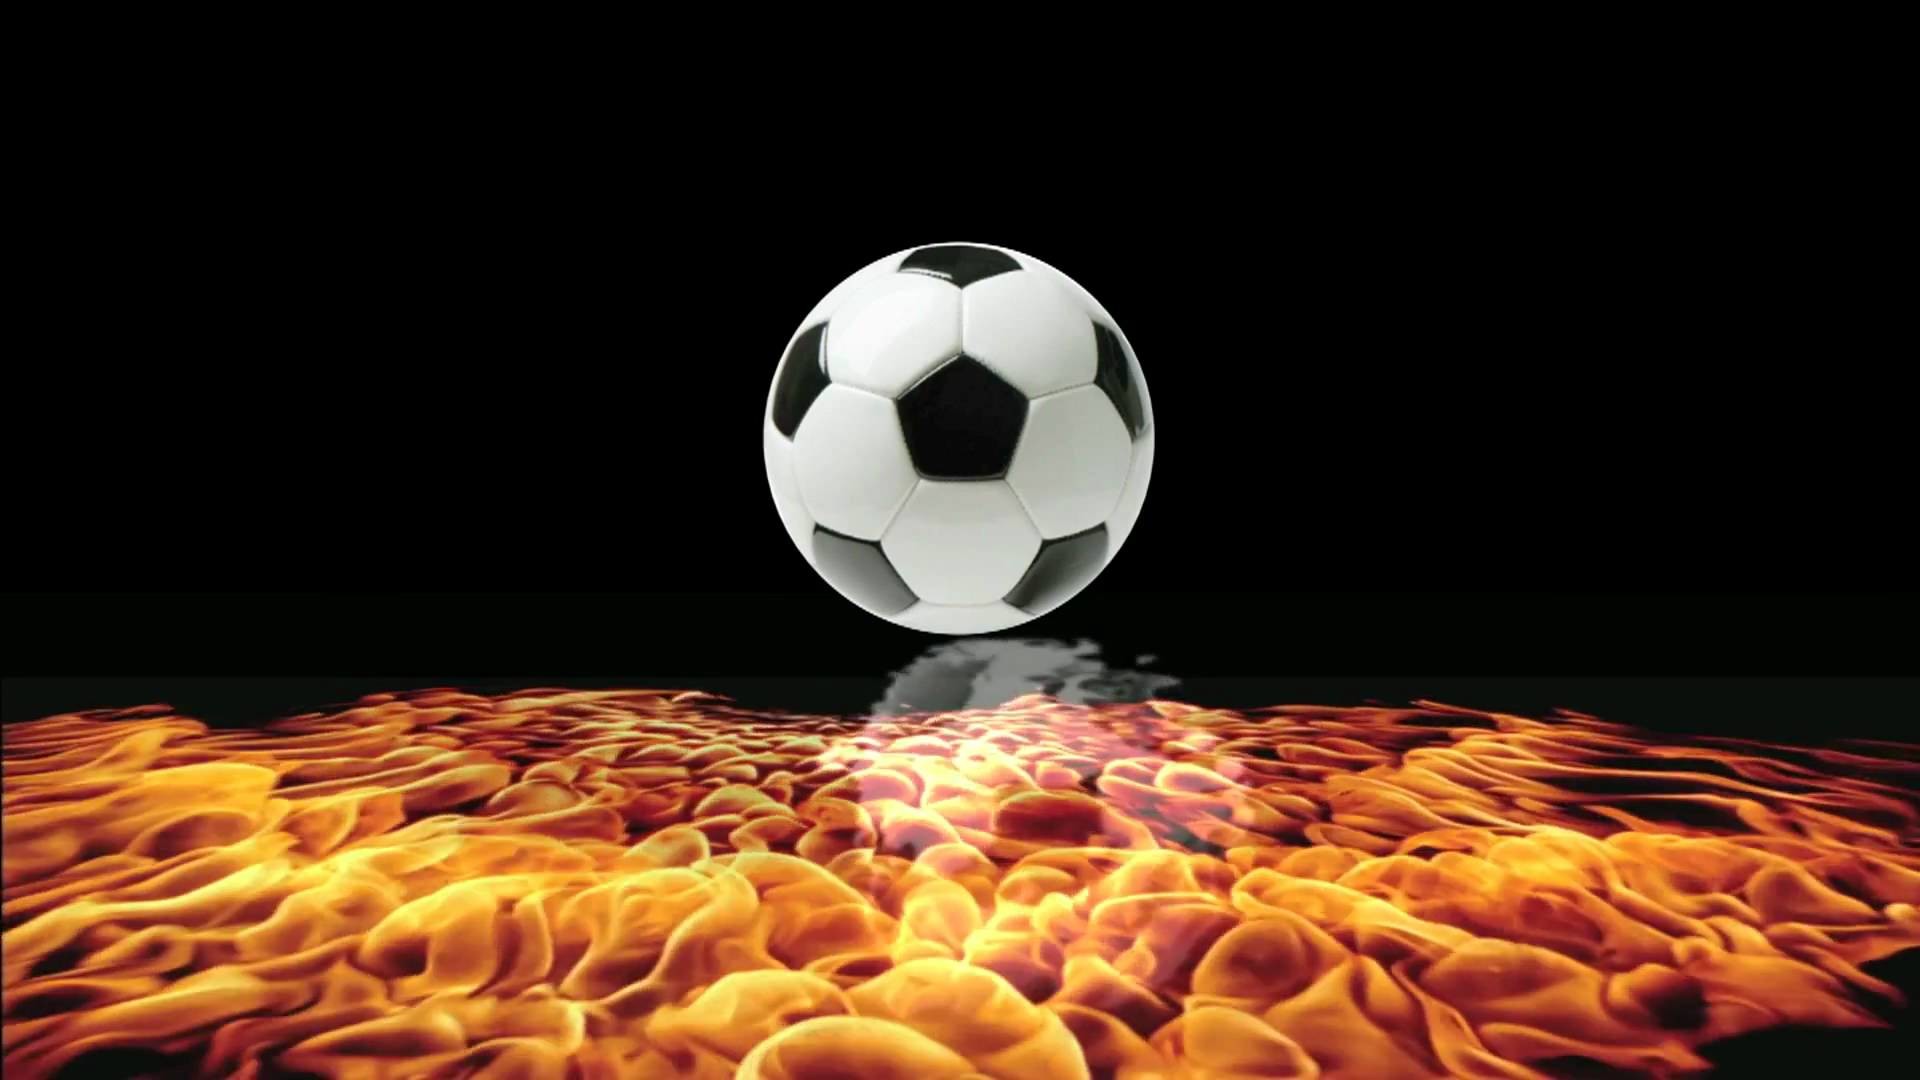 Flaming Soccer Ball Wallpaper (55+ images)